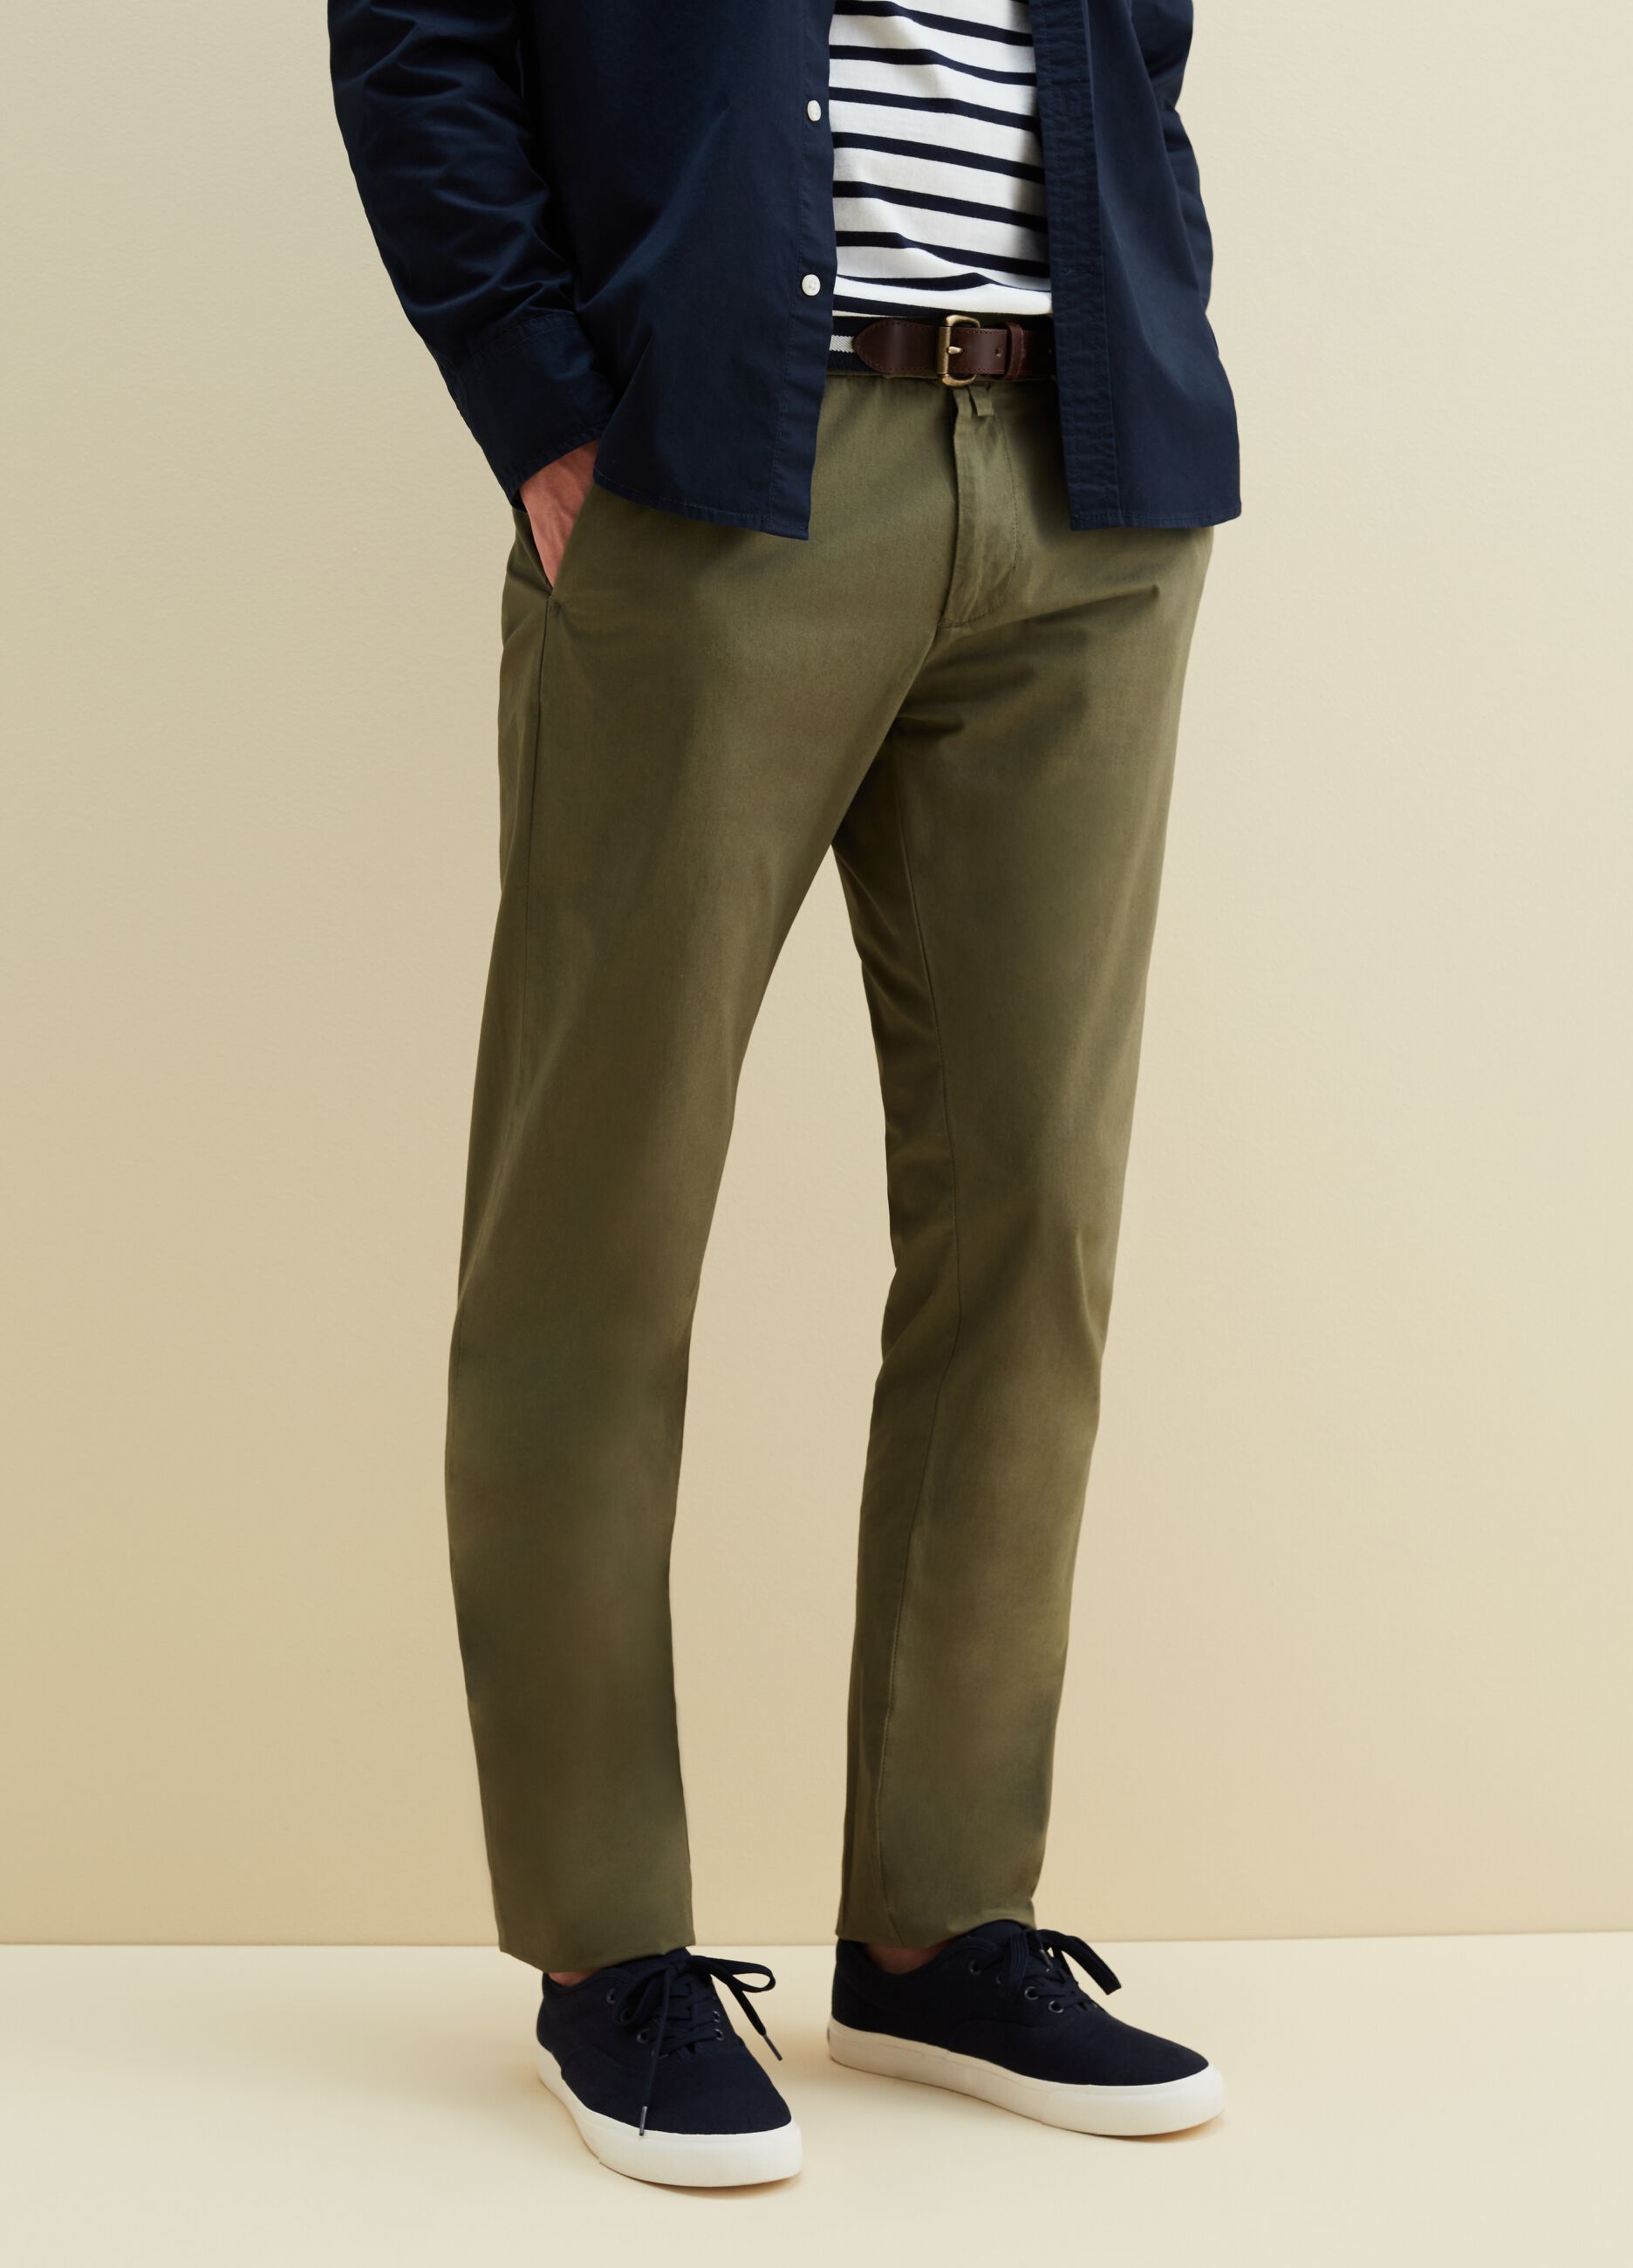 Solid colour cotton trousers